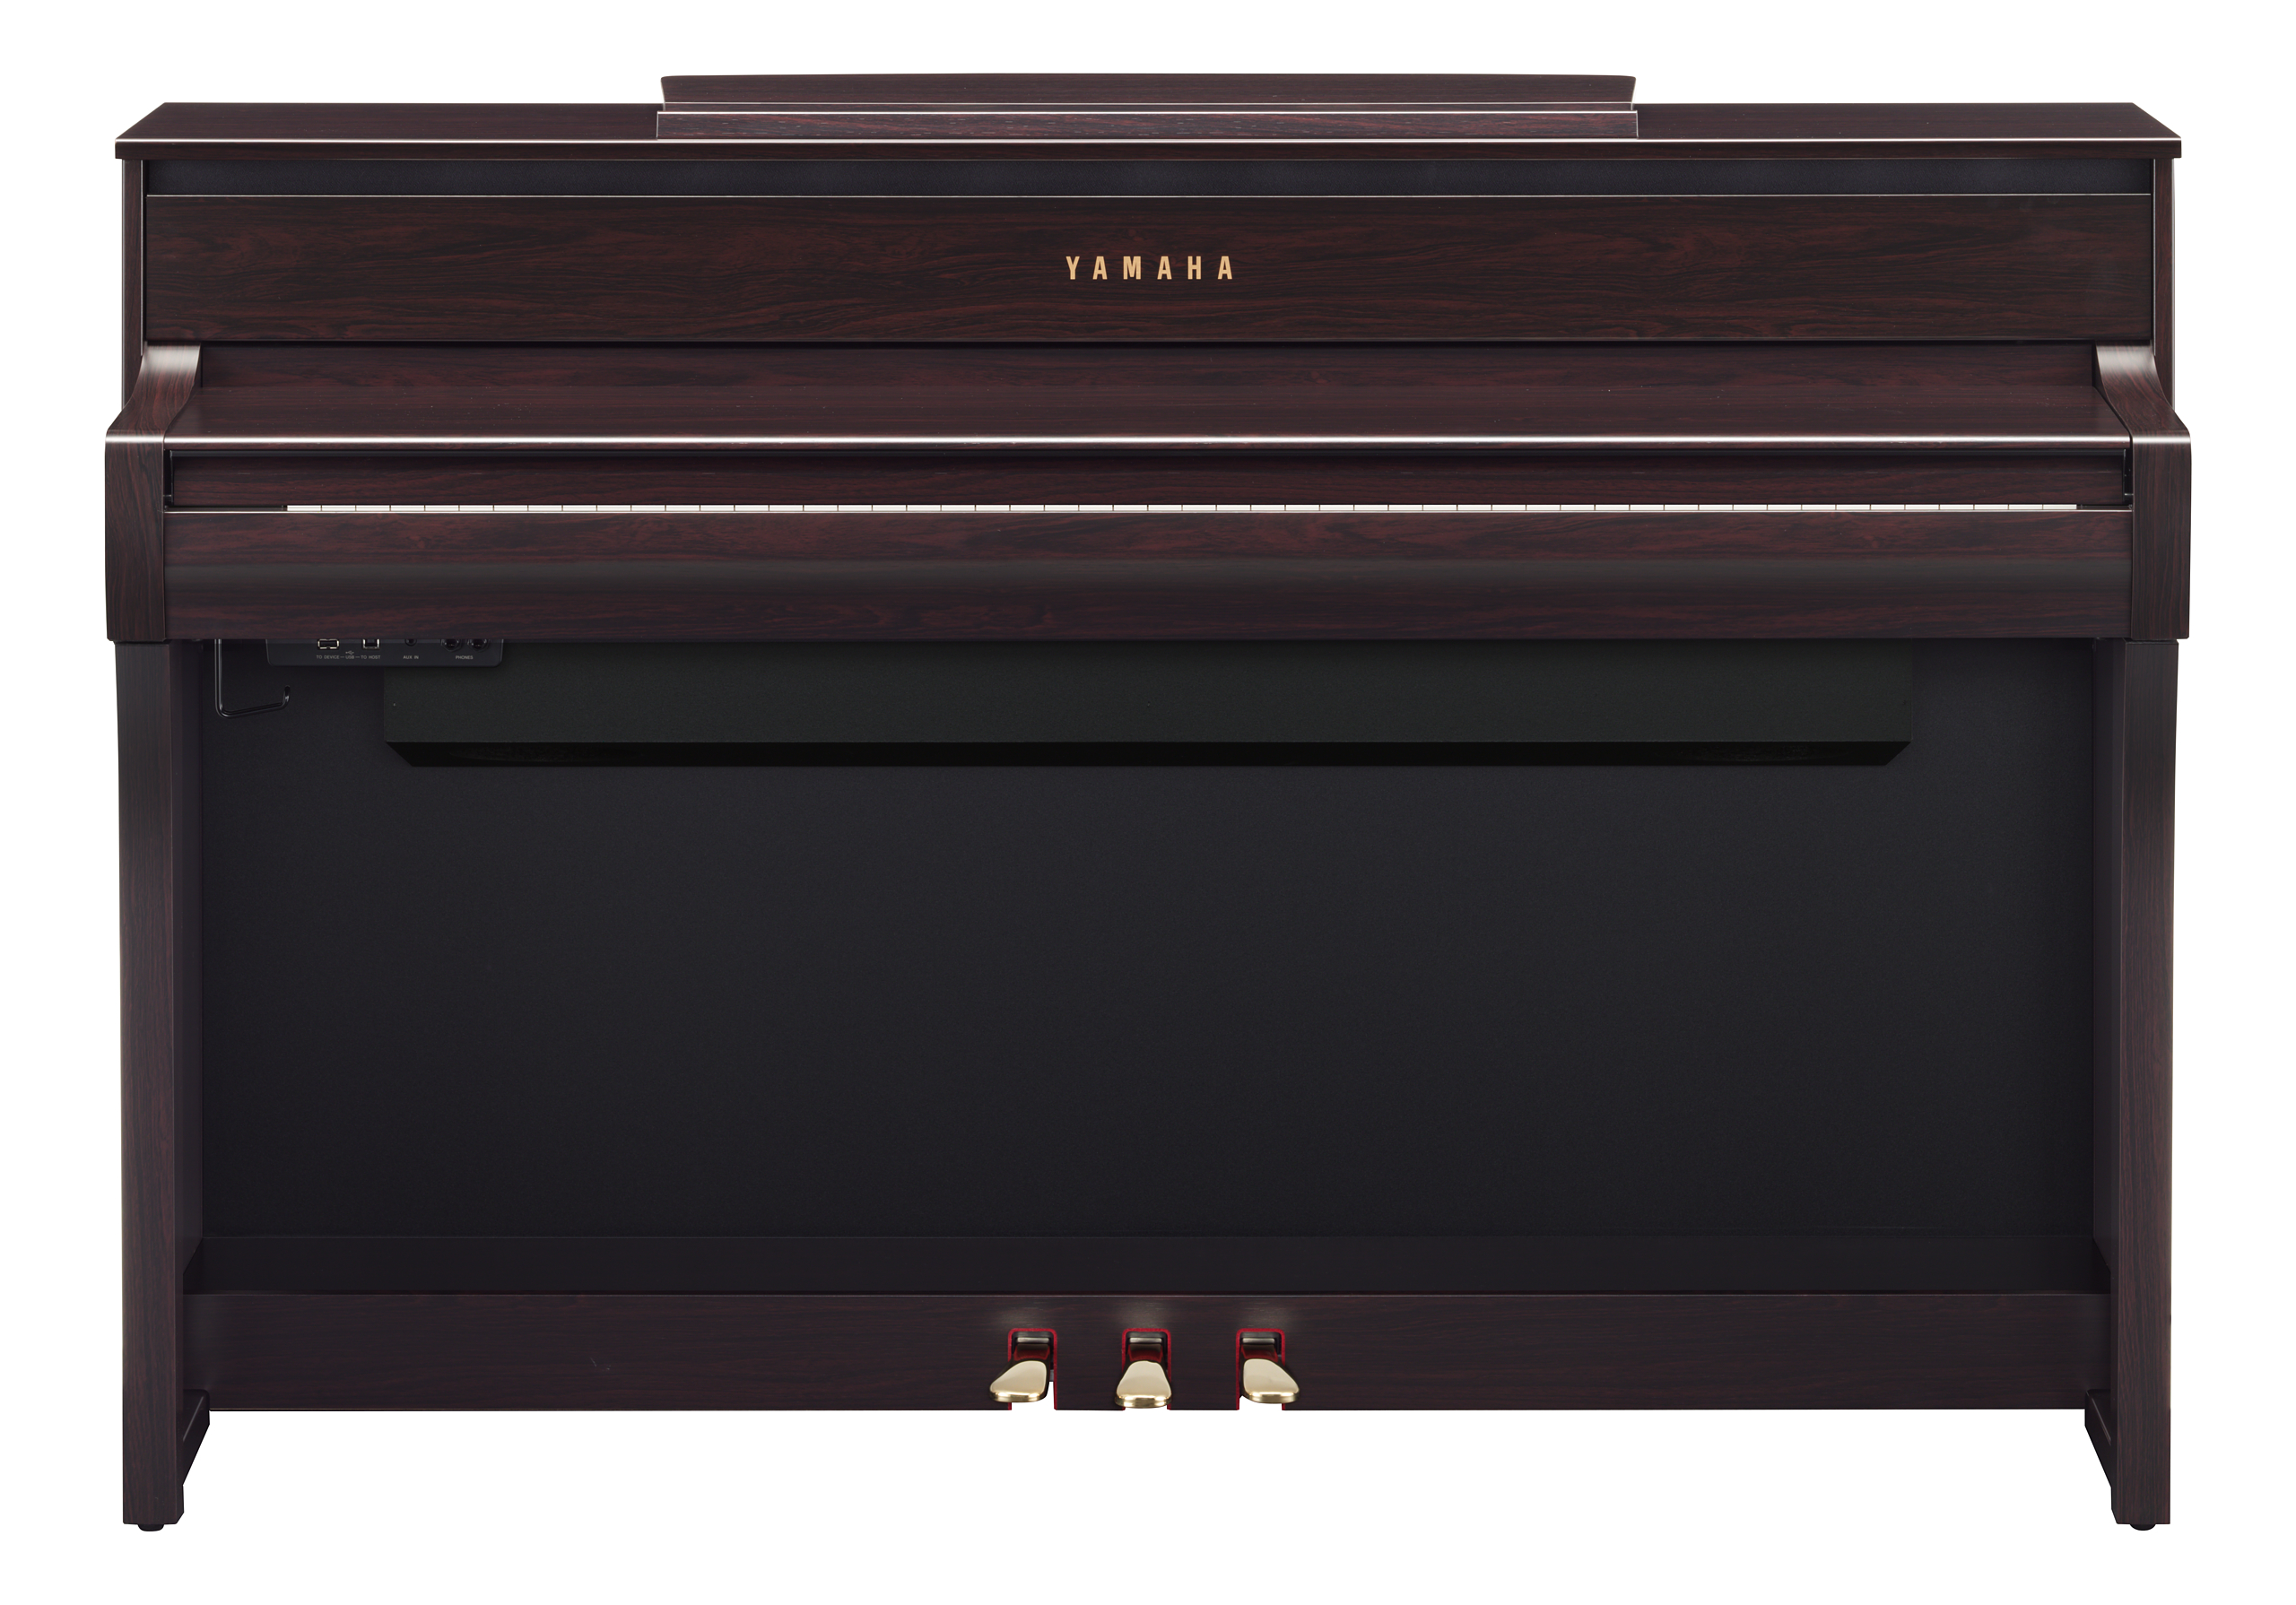 Yamaha Clp775r - Digitale piano met meubel - Variation 1